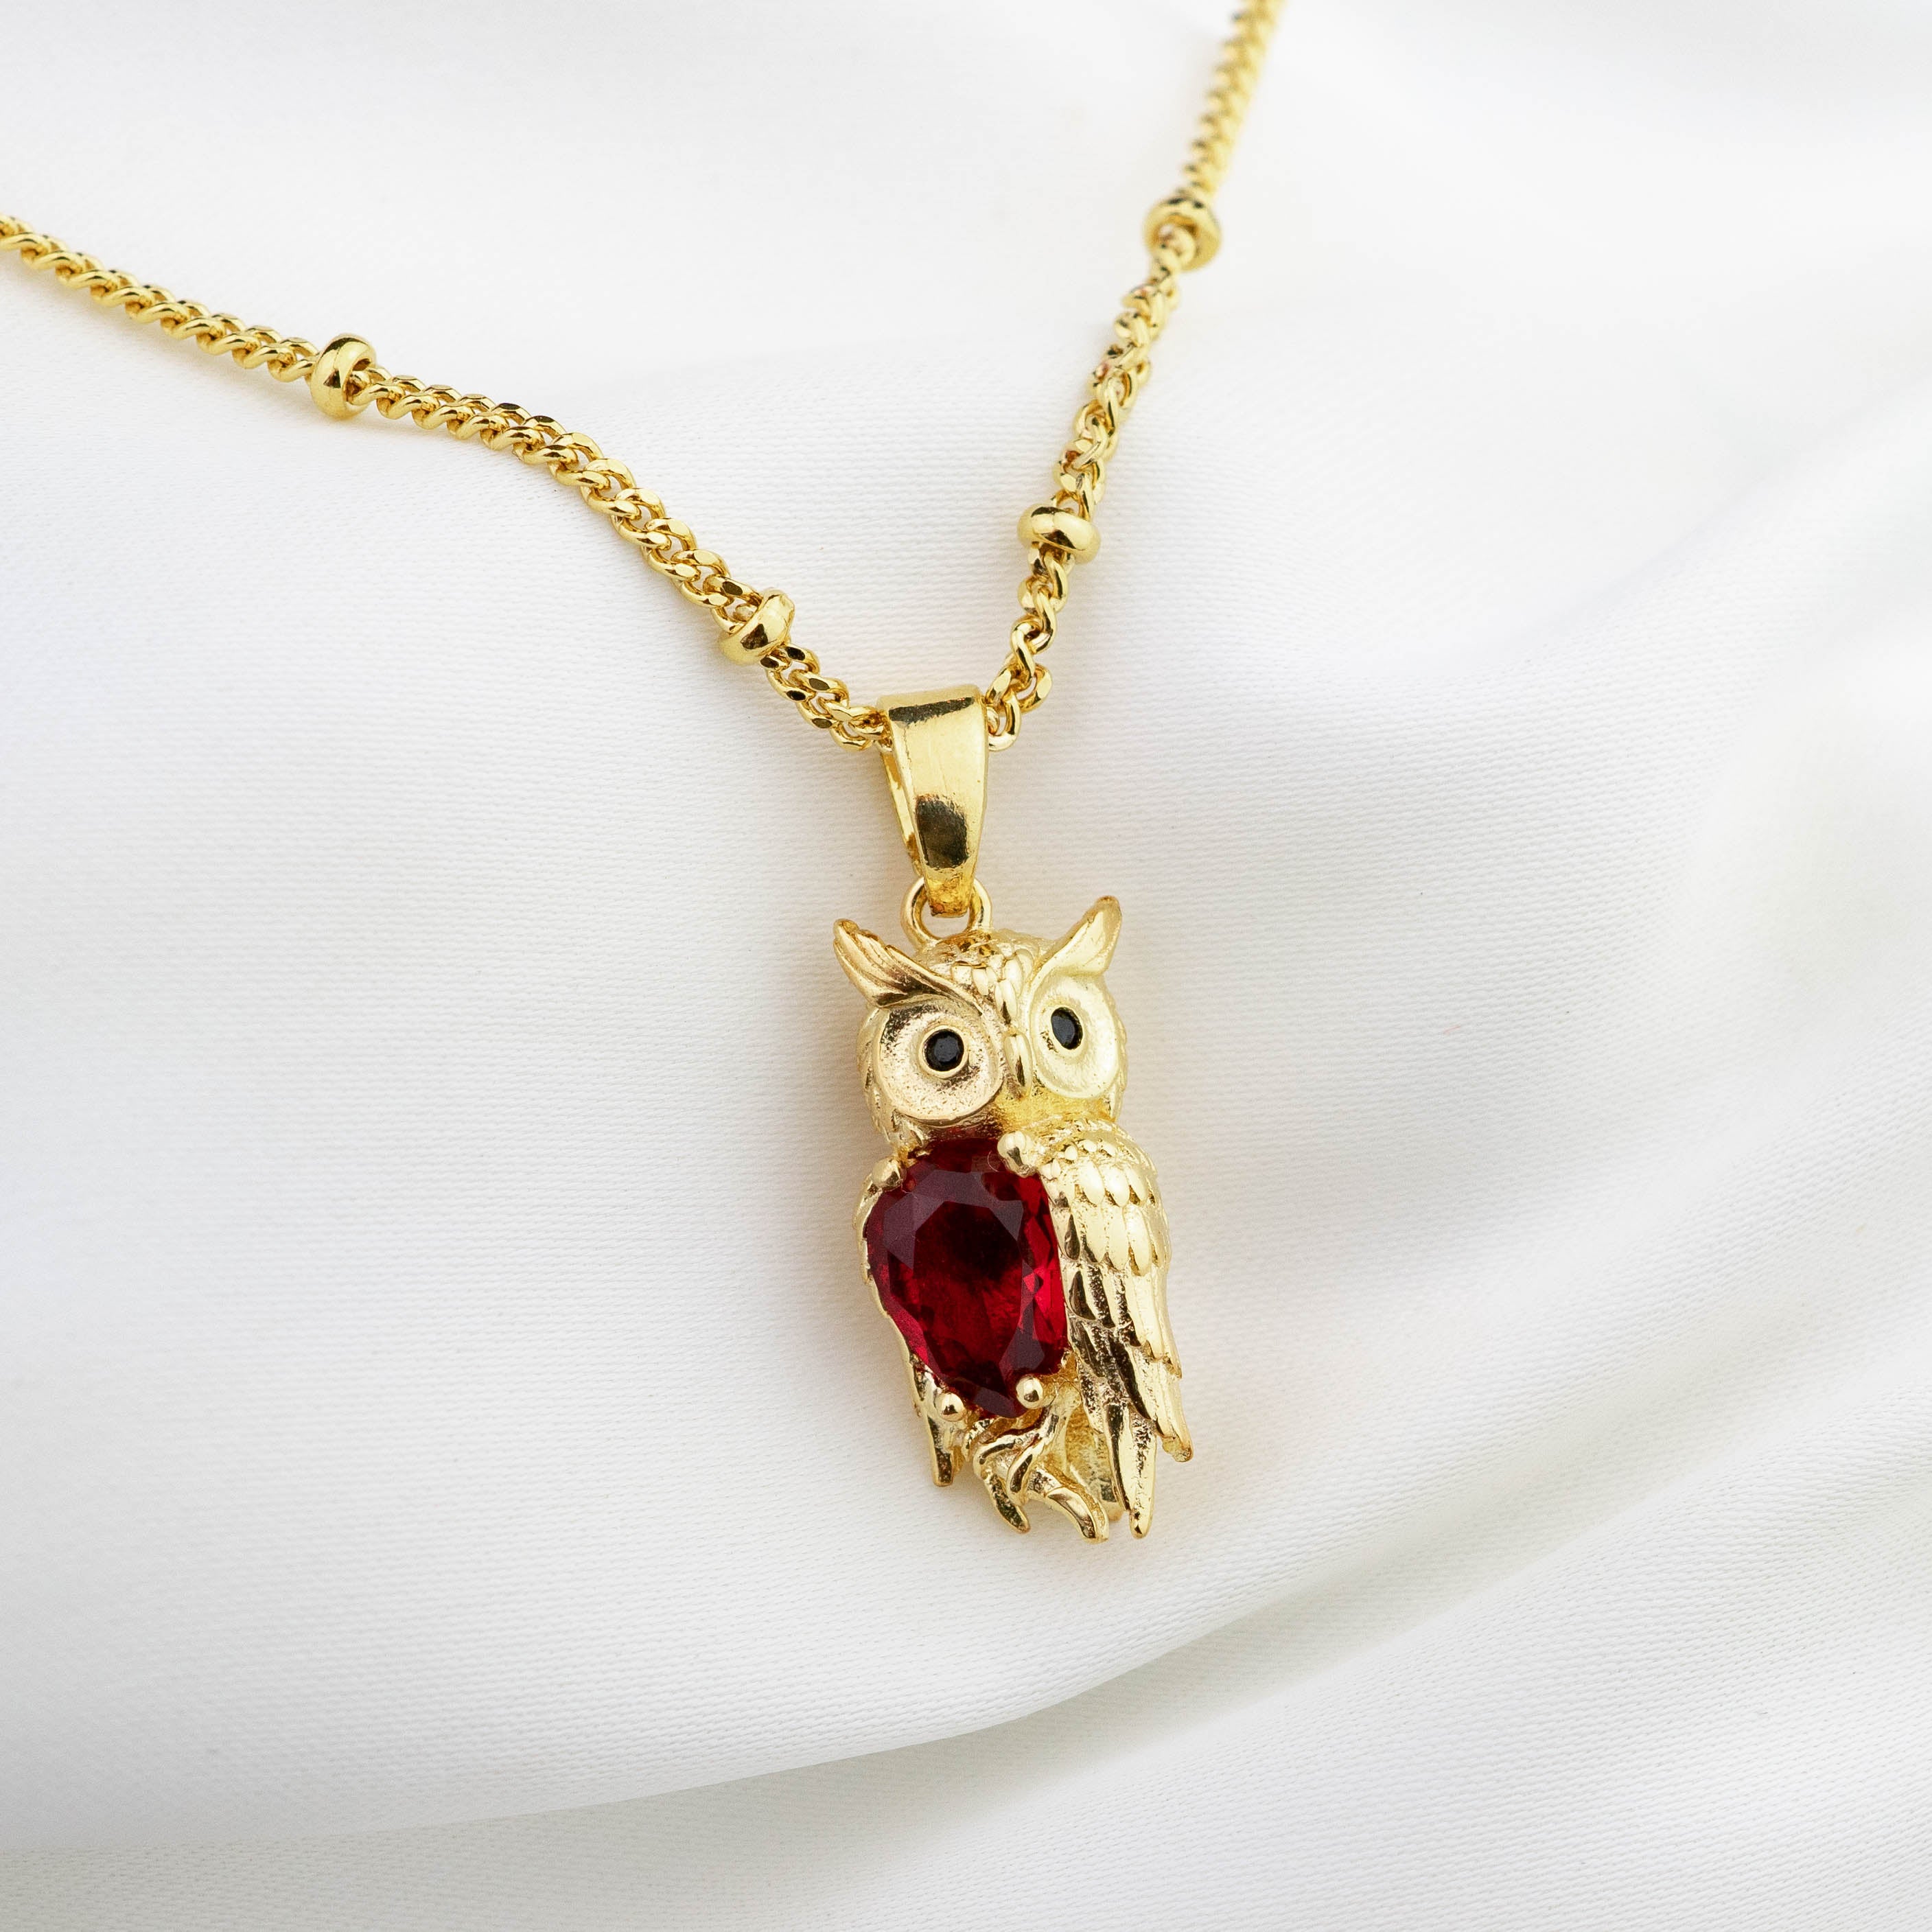 Buy Vintage Owl Necklace Gold Over Sterling Vermeil Online in India - Etsy